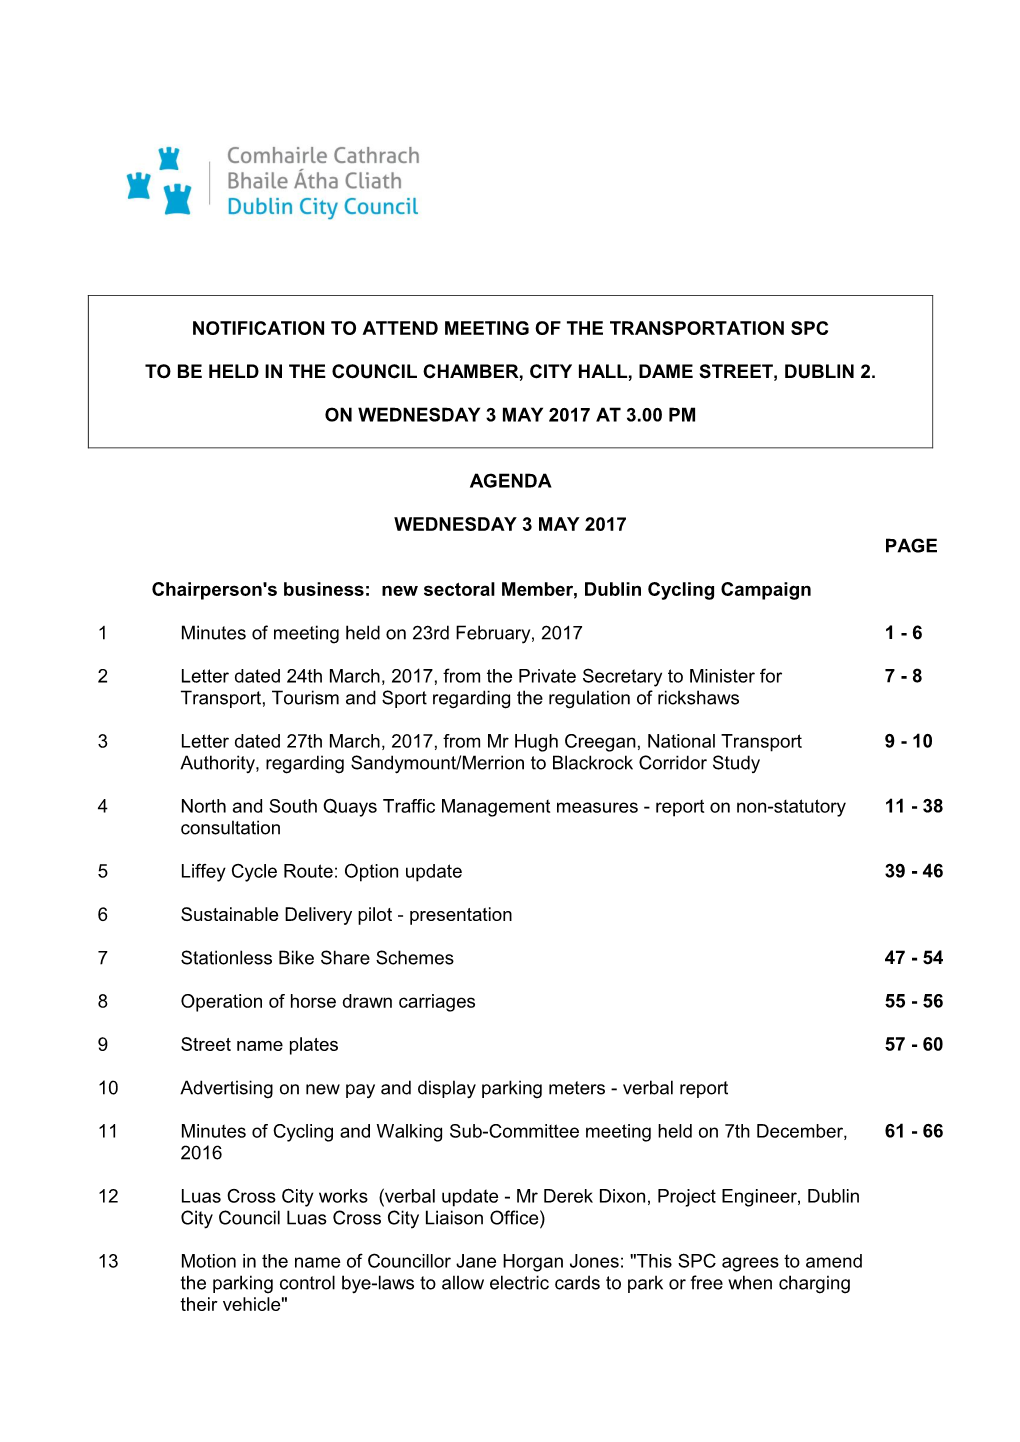 (Public Pack)Agenda Document for Transportation SPC, 03/05/2017 15